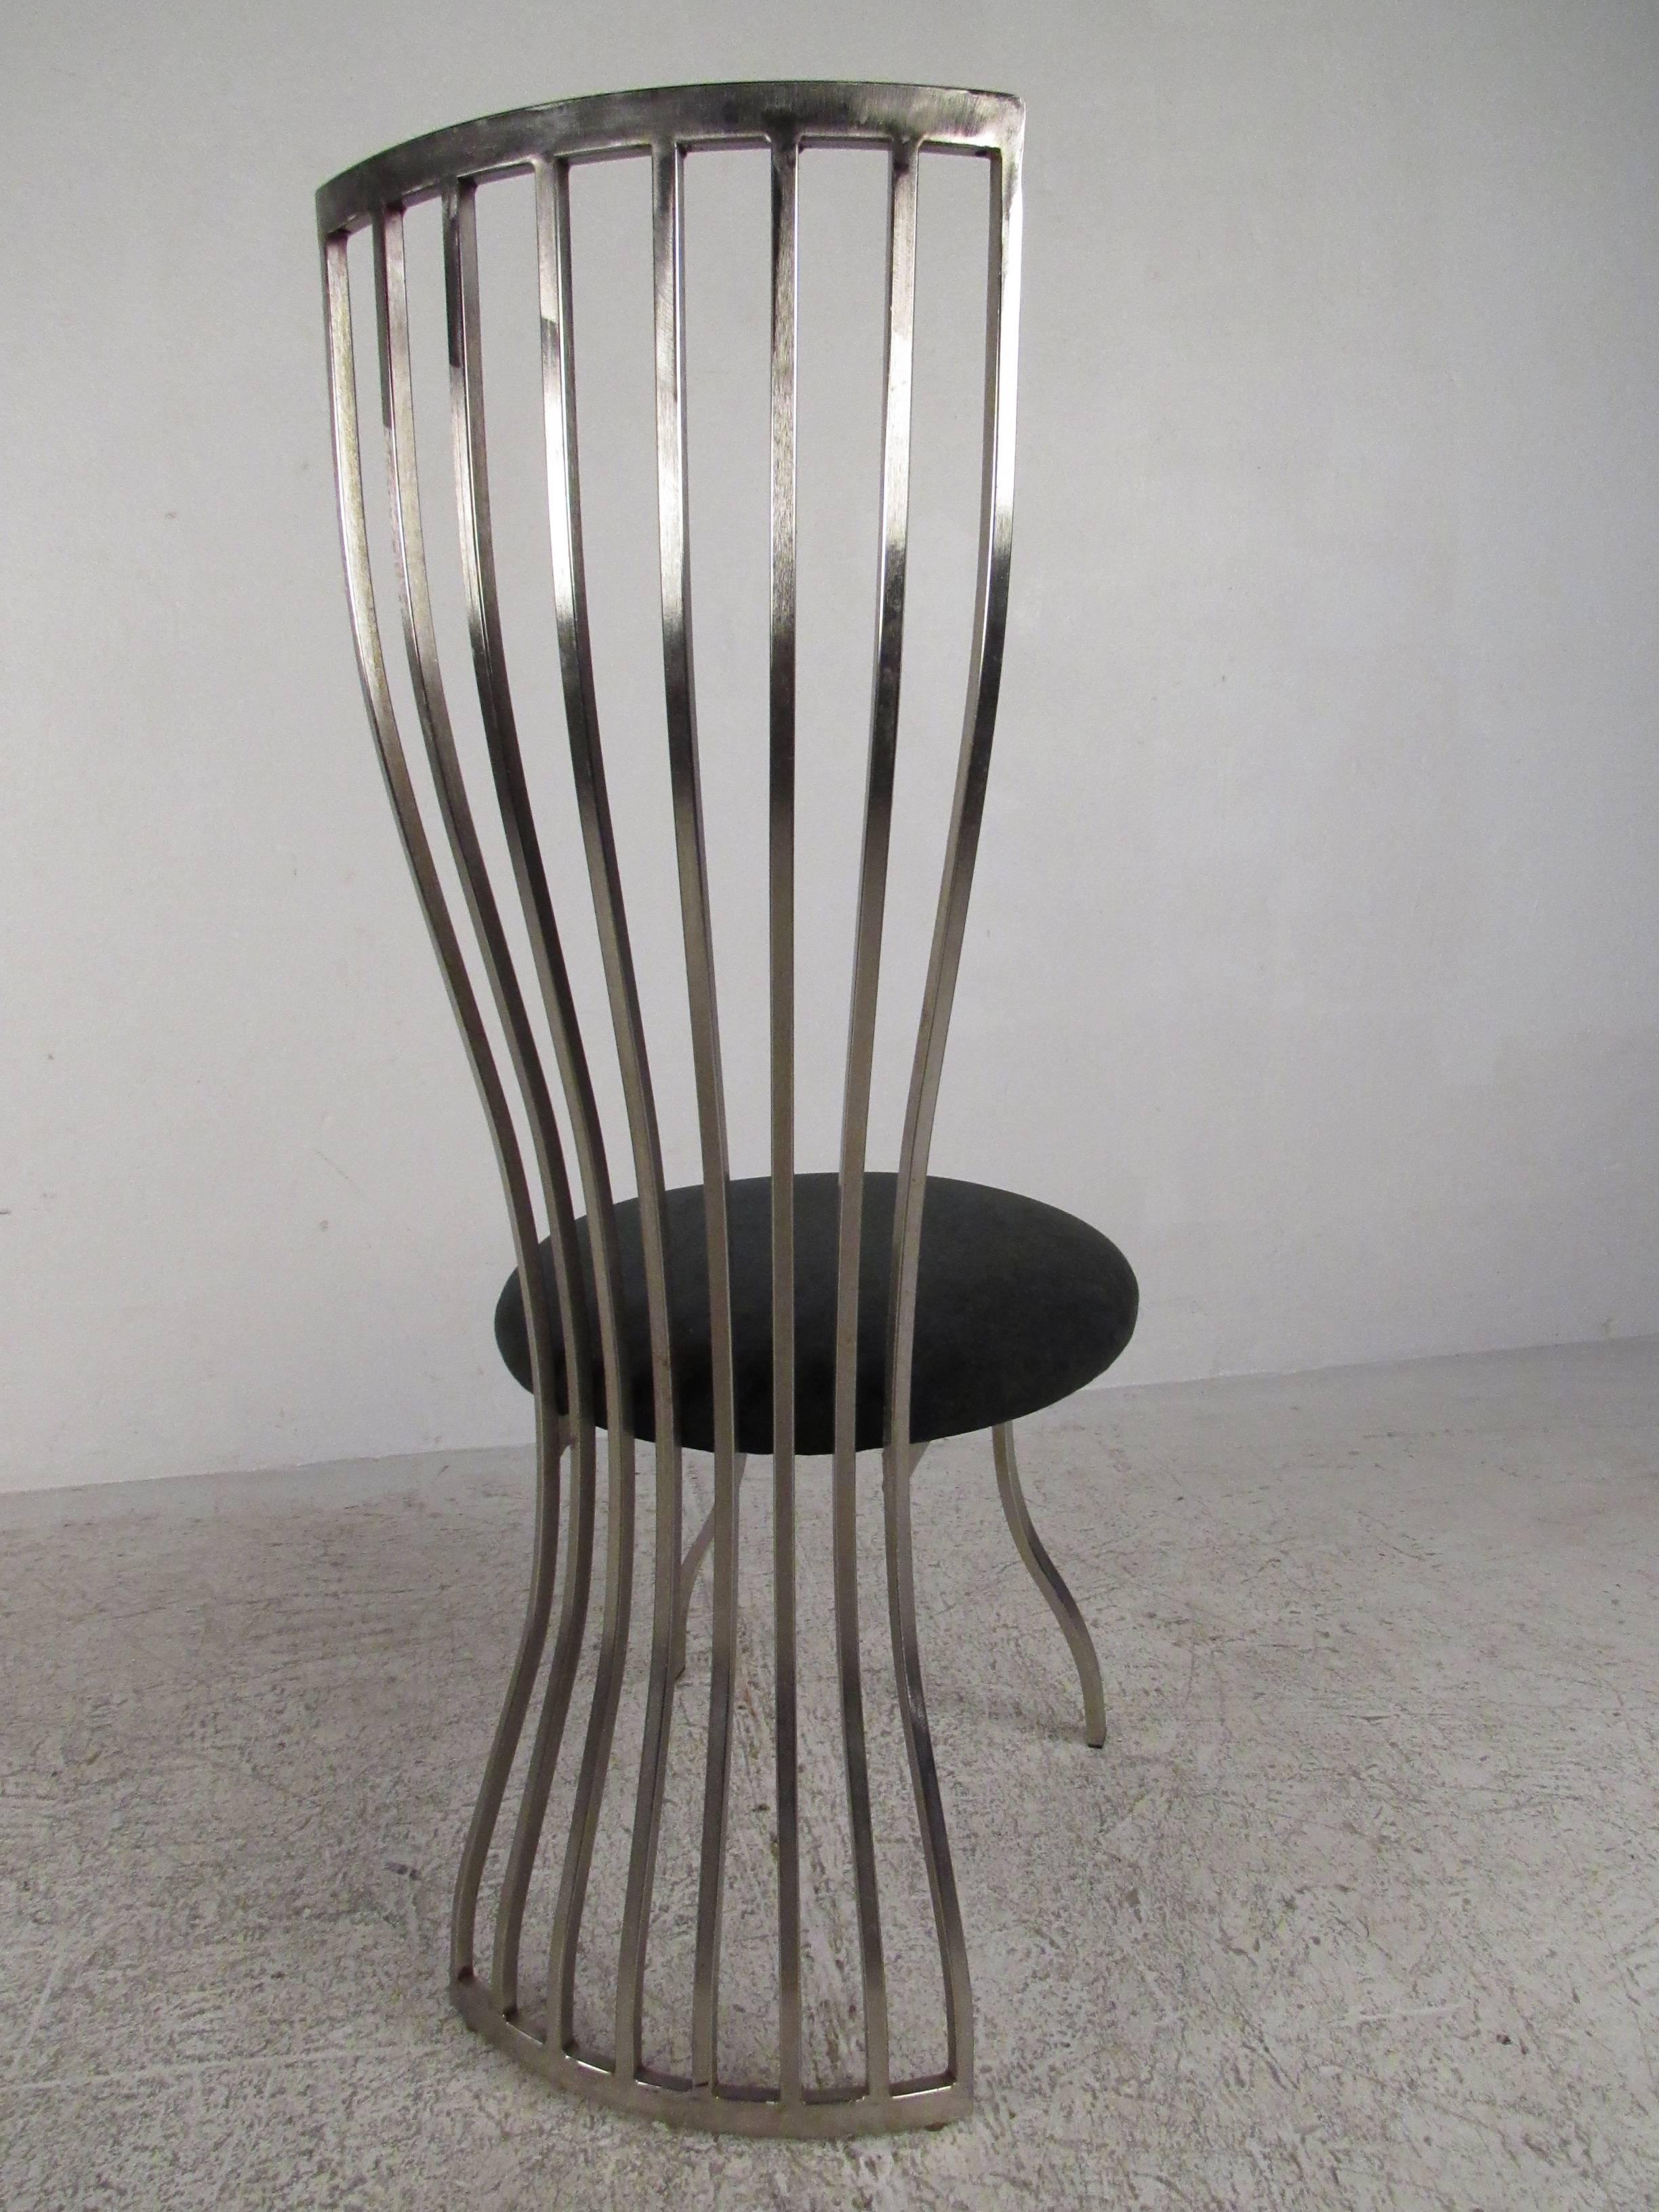 Stunning Modern Set of Sculptural Steel Dining Chairs 1